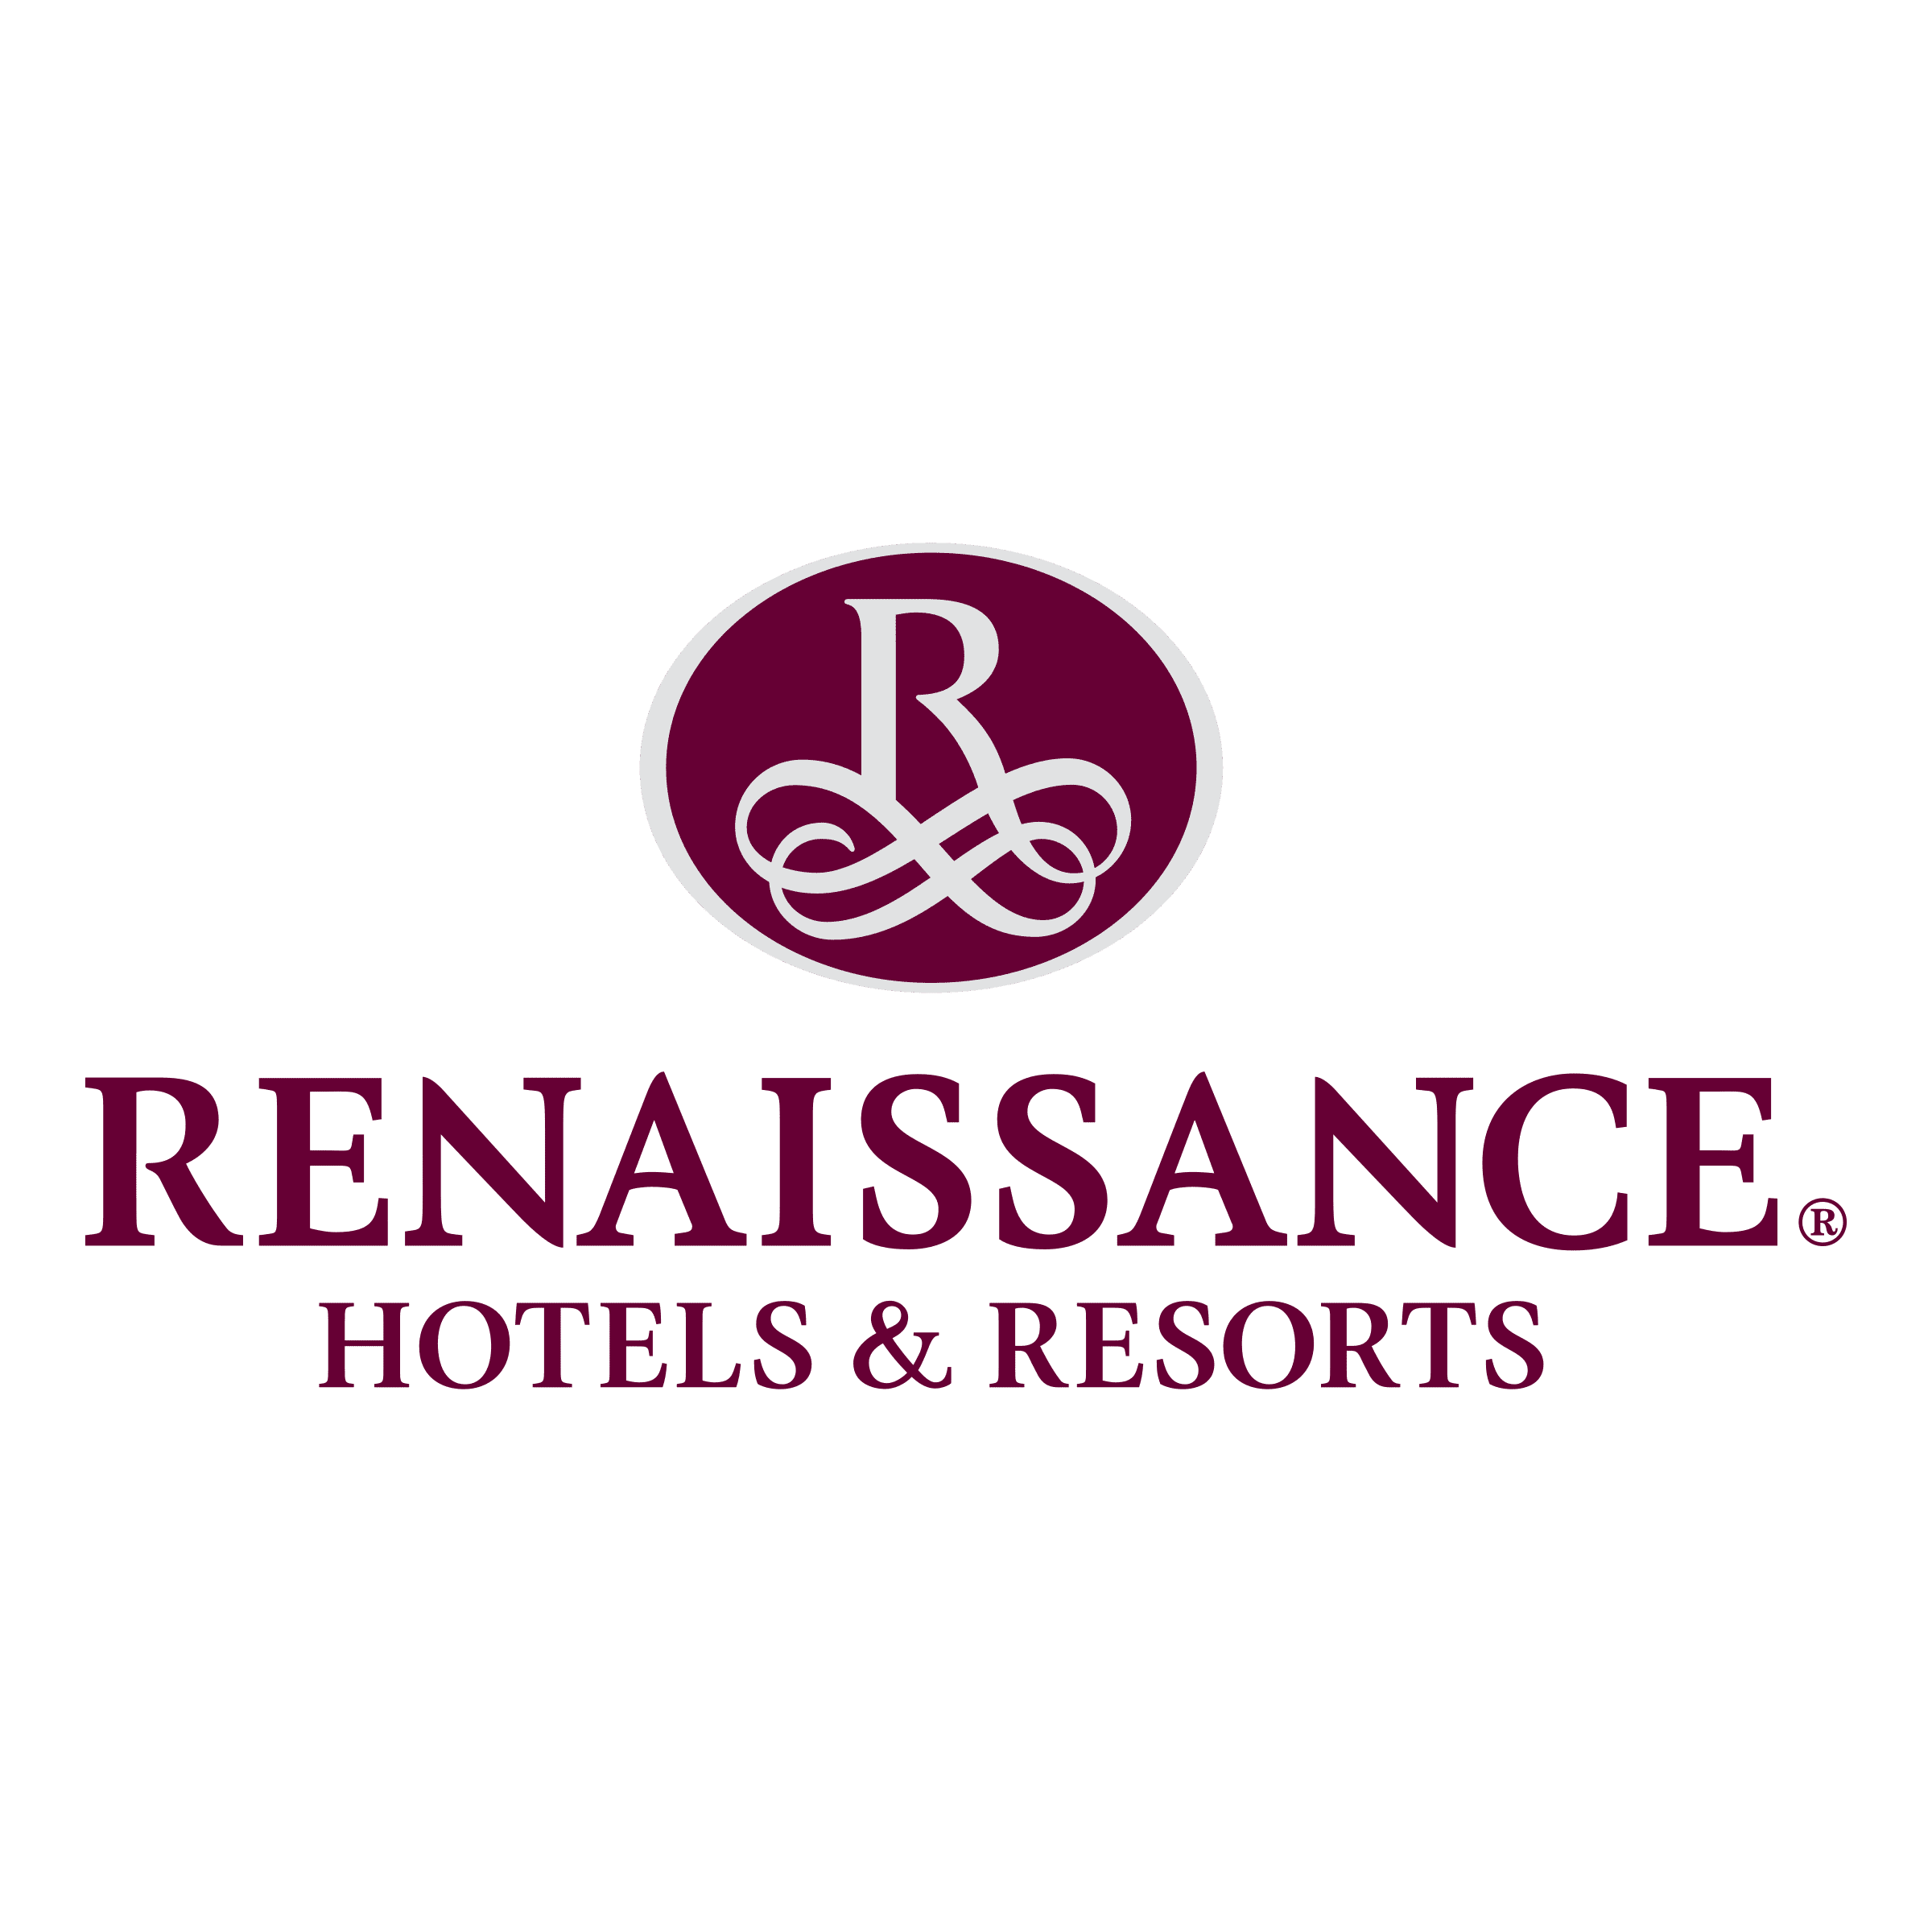 renaissance hotels logo